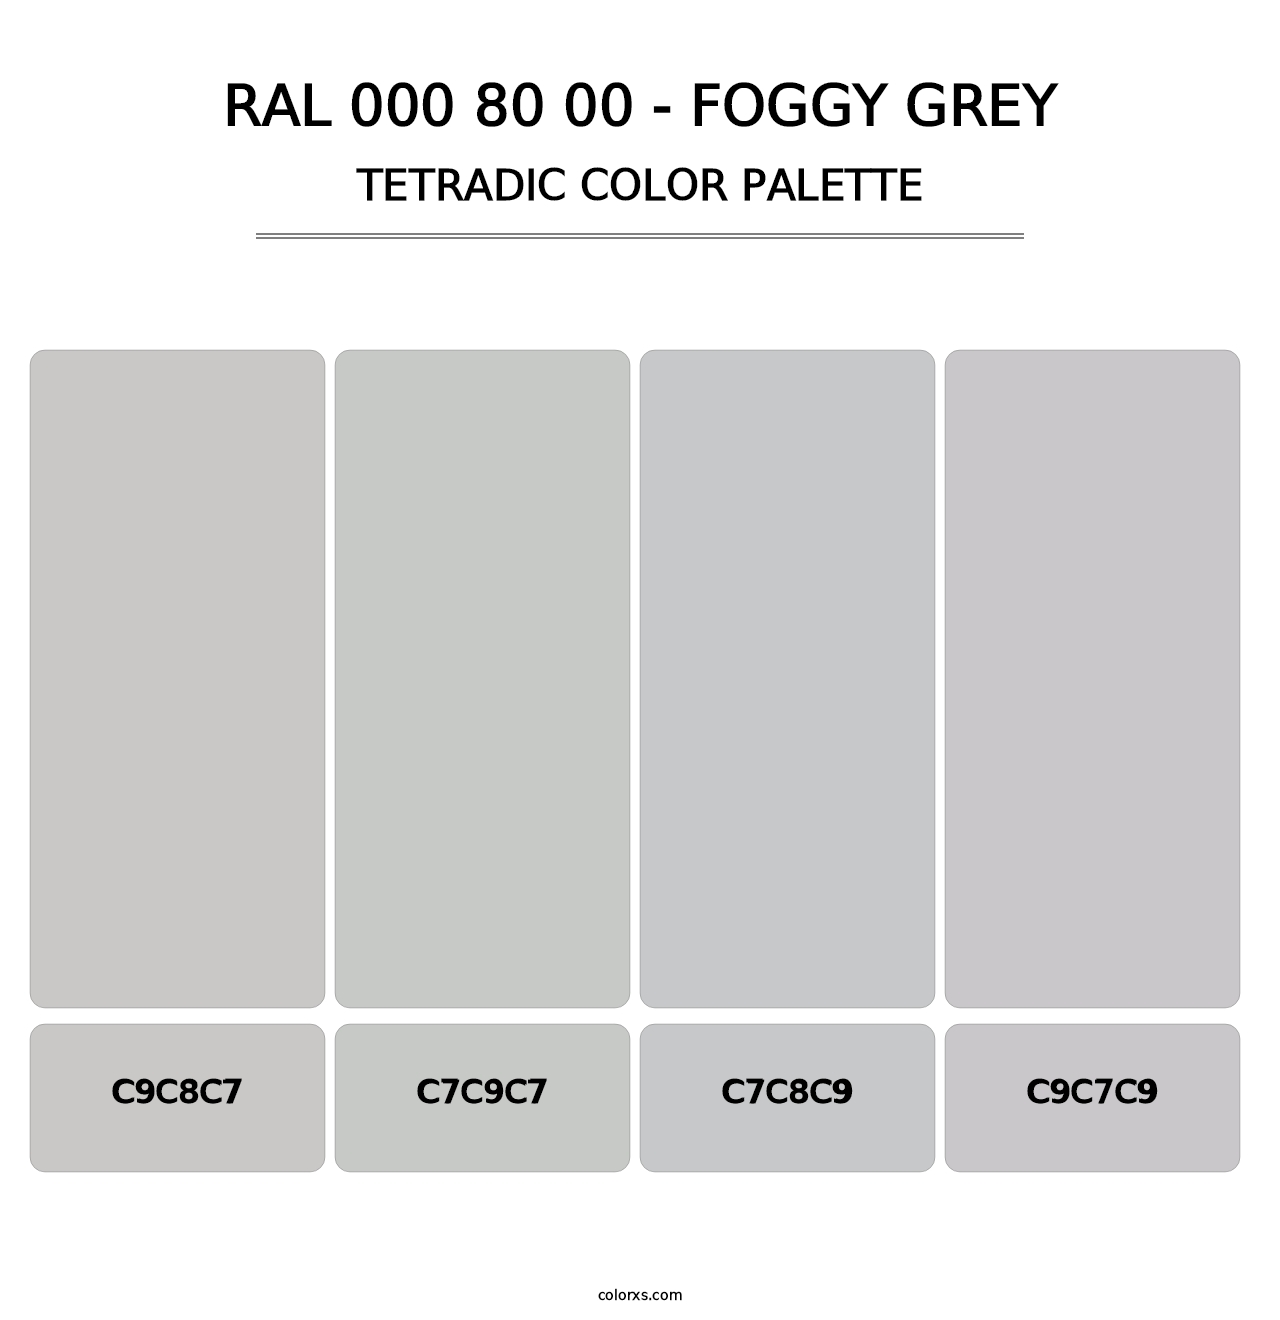 RAL 000 80 00 - Foggy Grey - Tetradic Color Palette